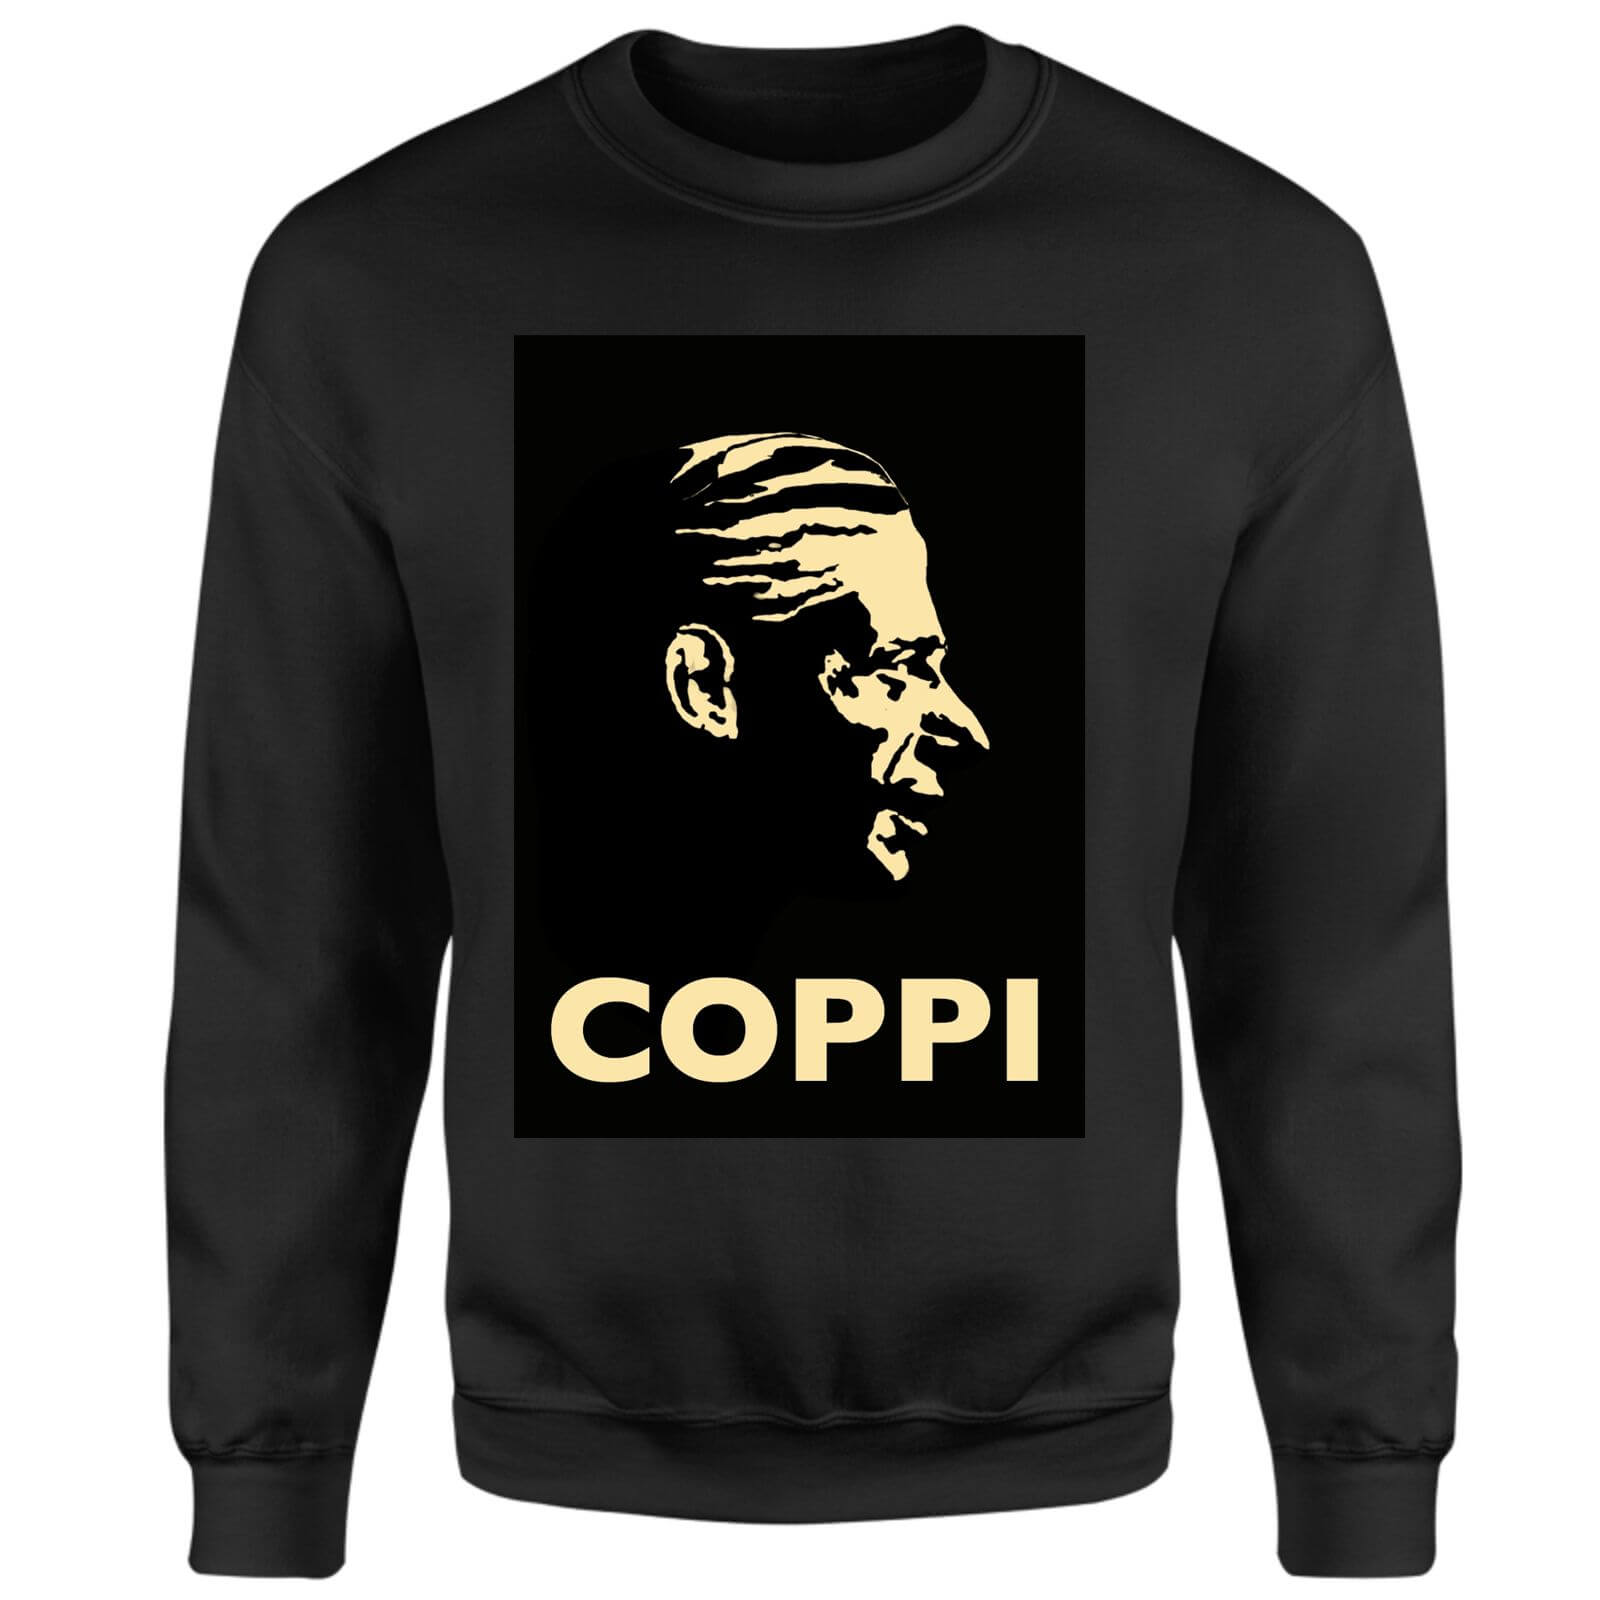 Coppi Sweatshirt - Black - XXL - Black